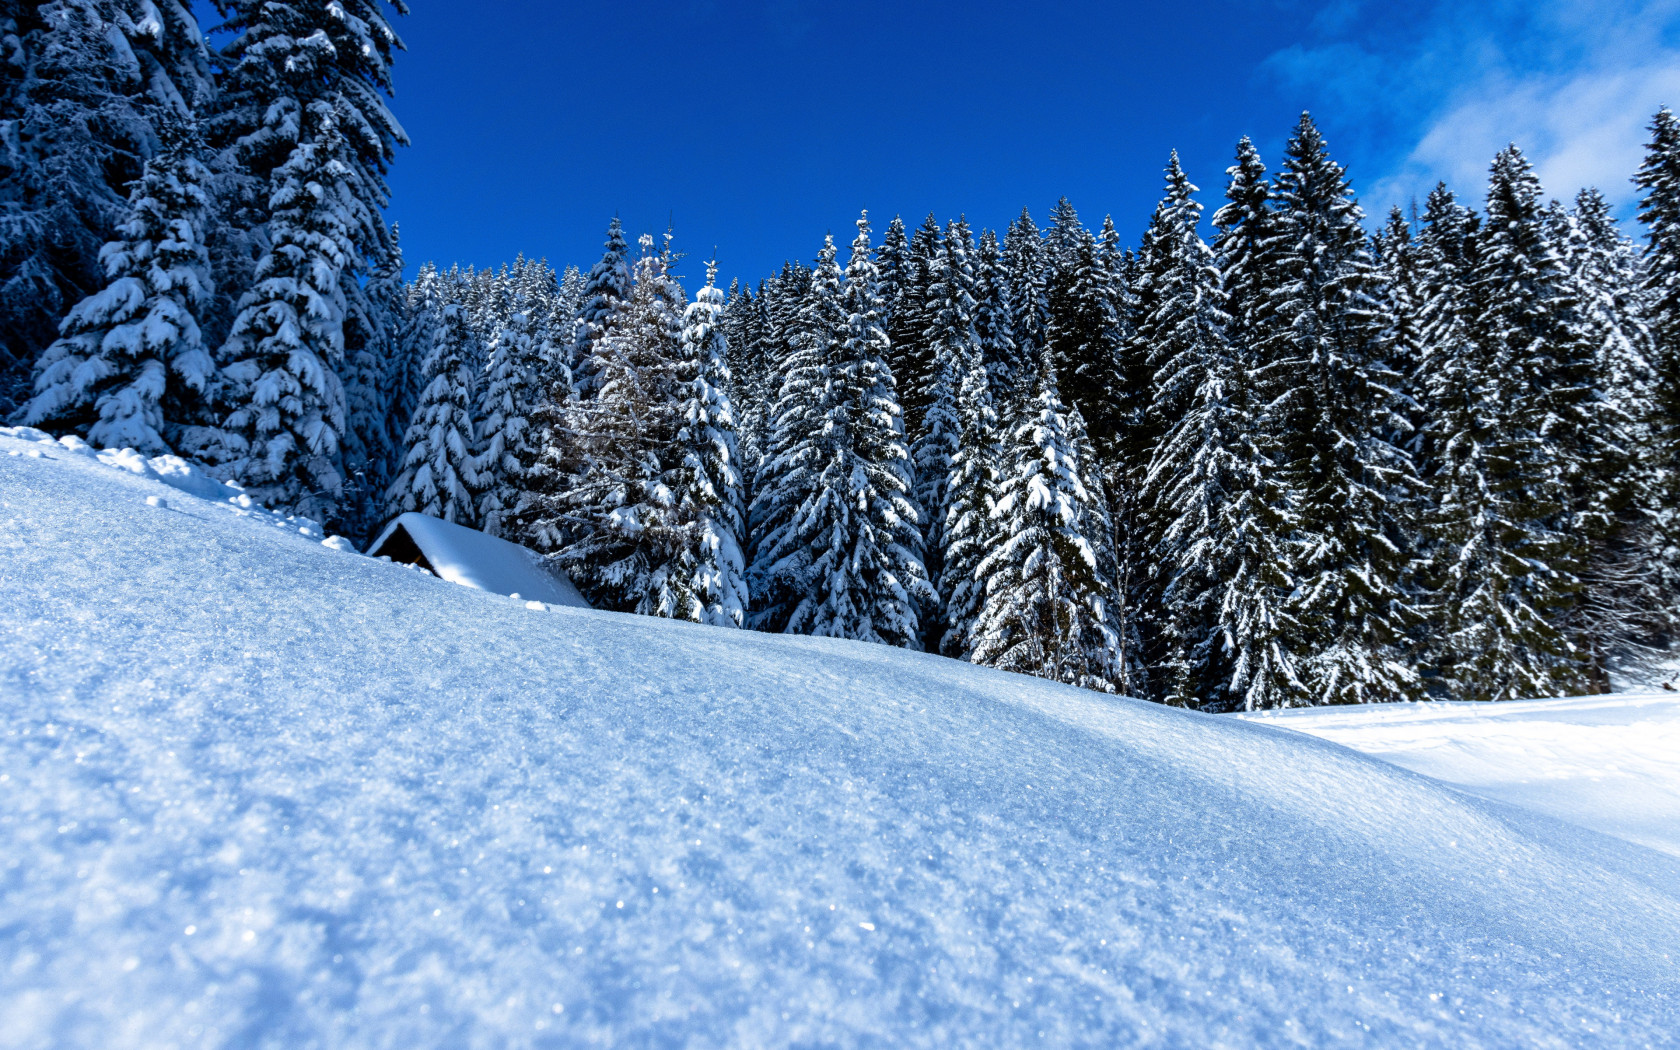 Download wallpaper: Winter landscape full of snow 1680x1050